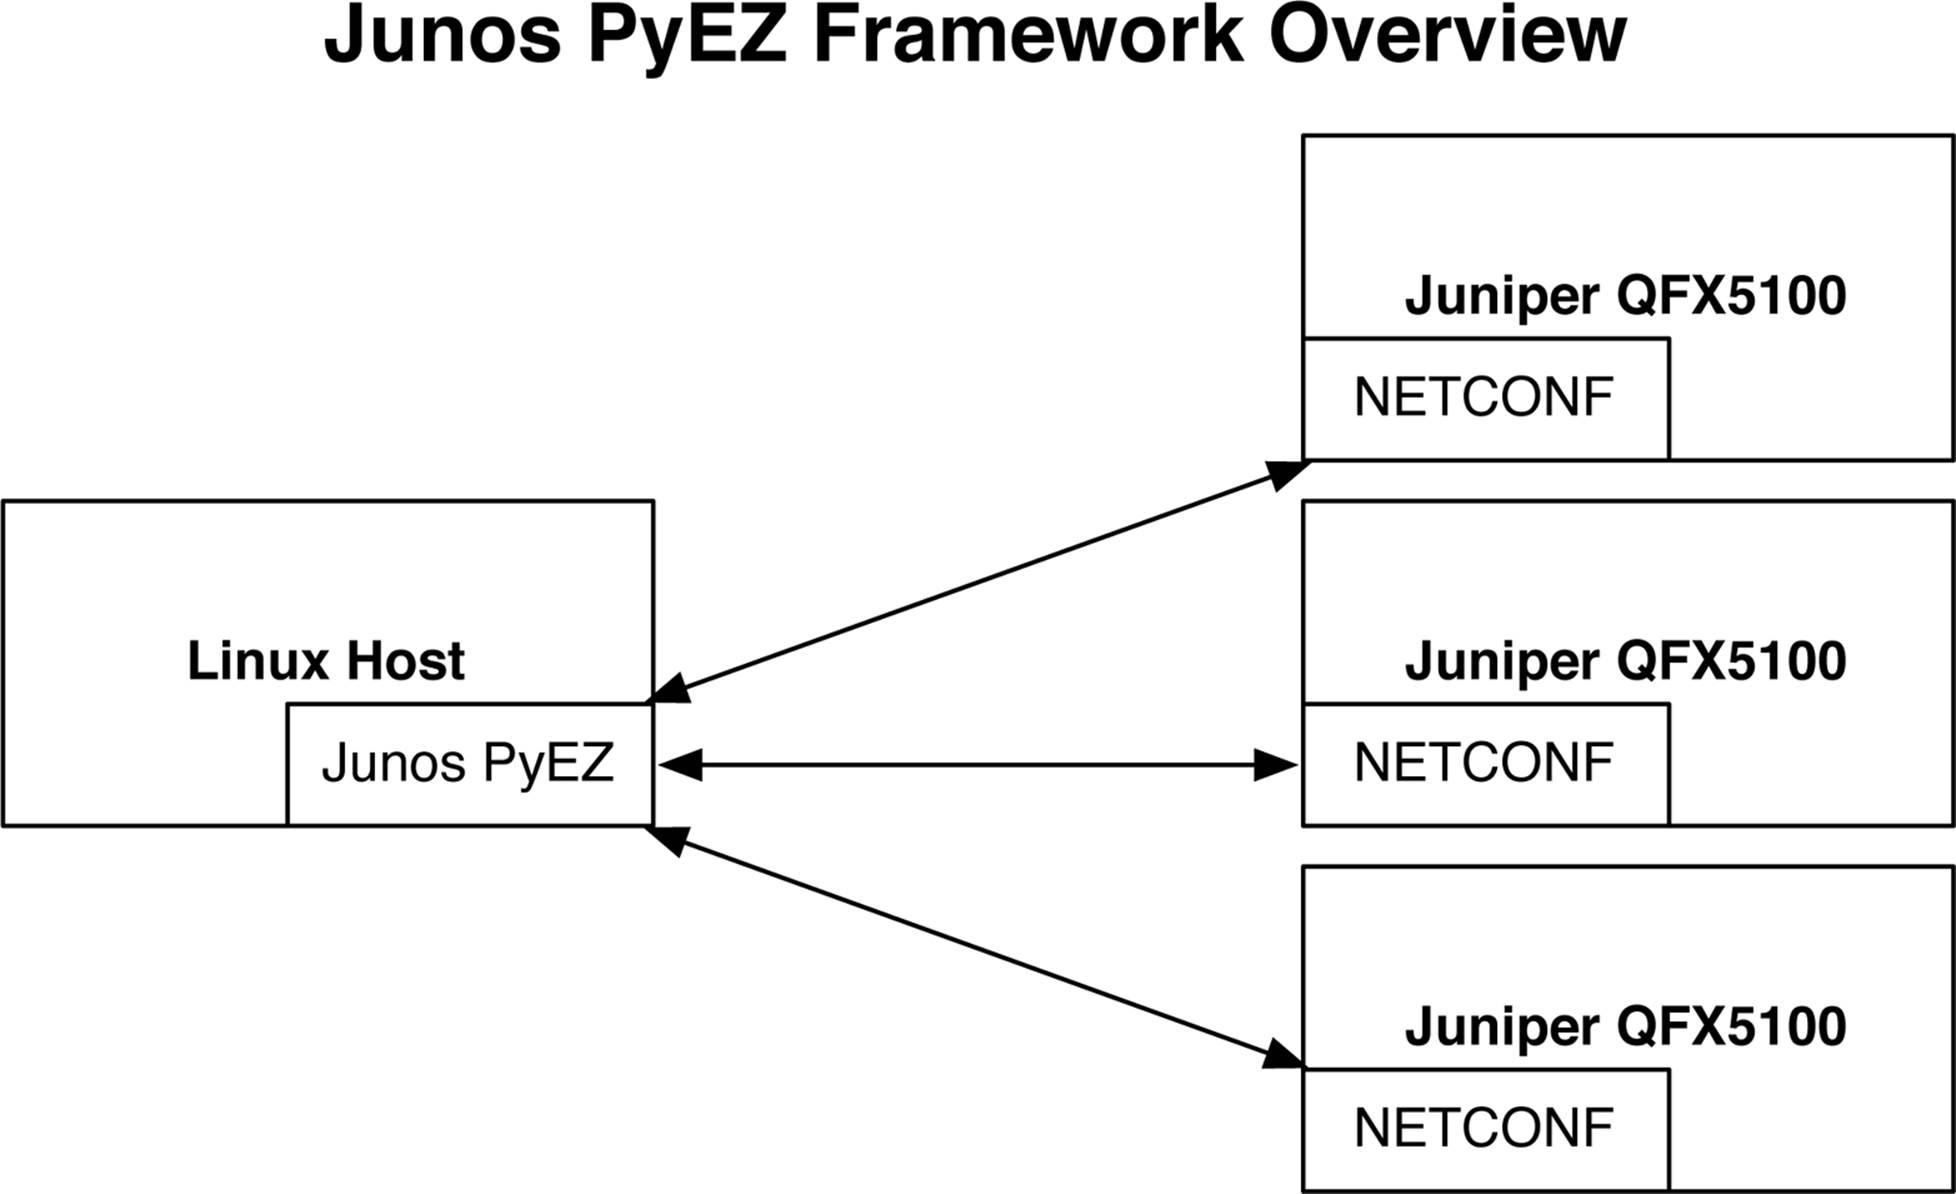 Junos PyEZ framework overview